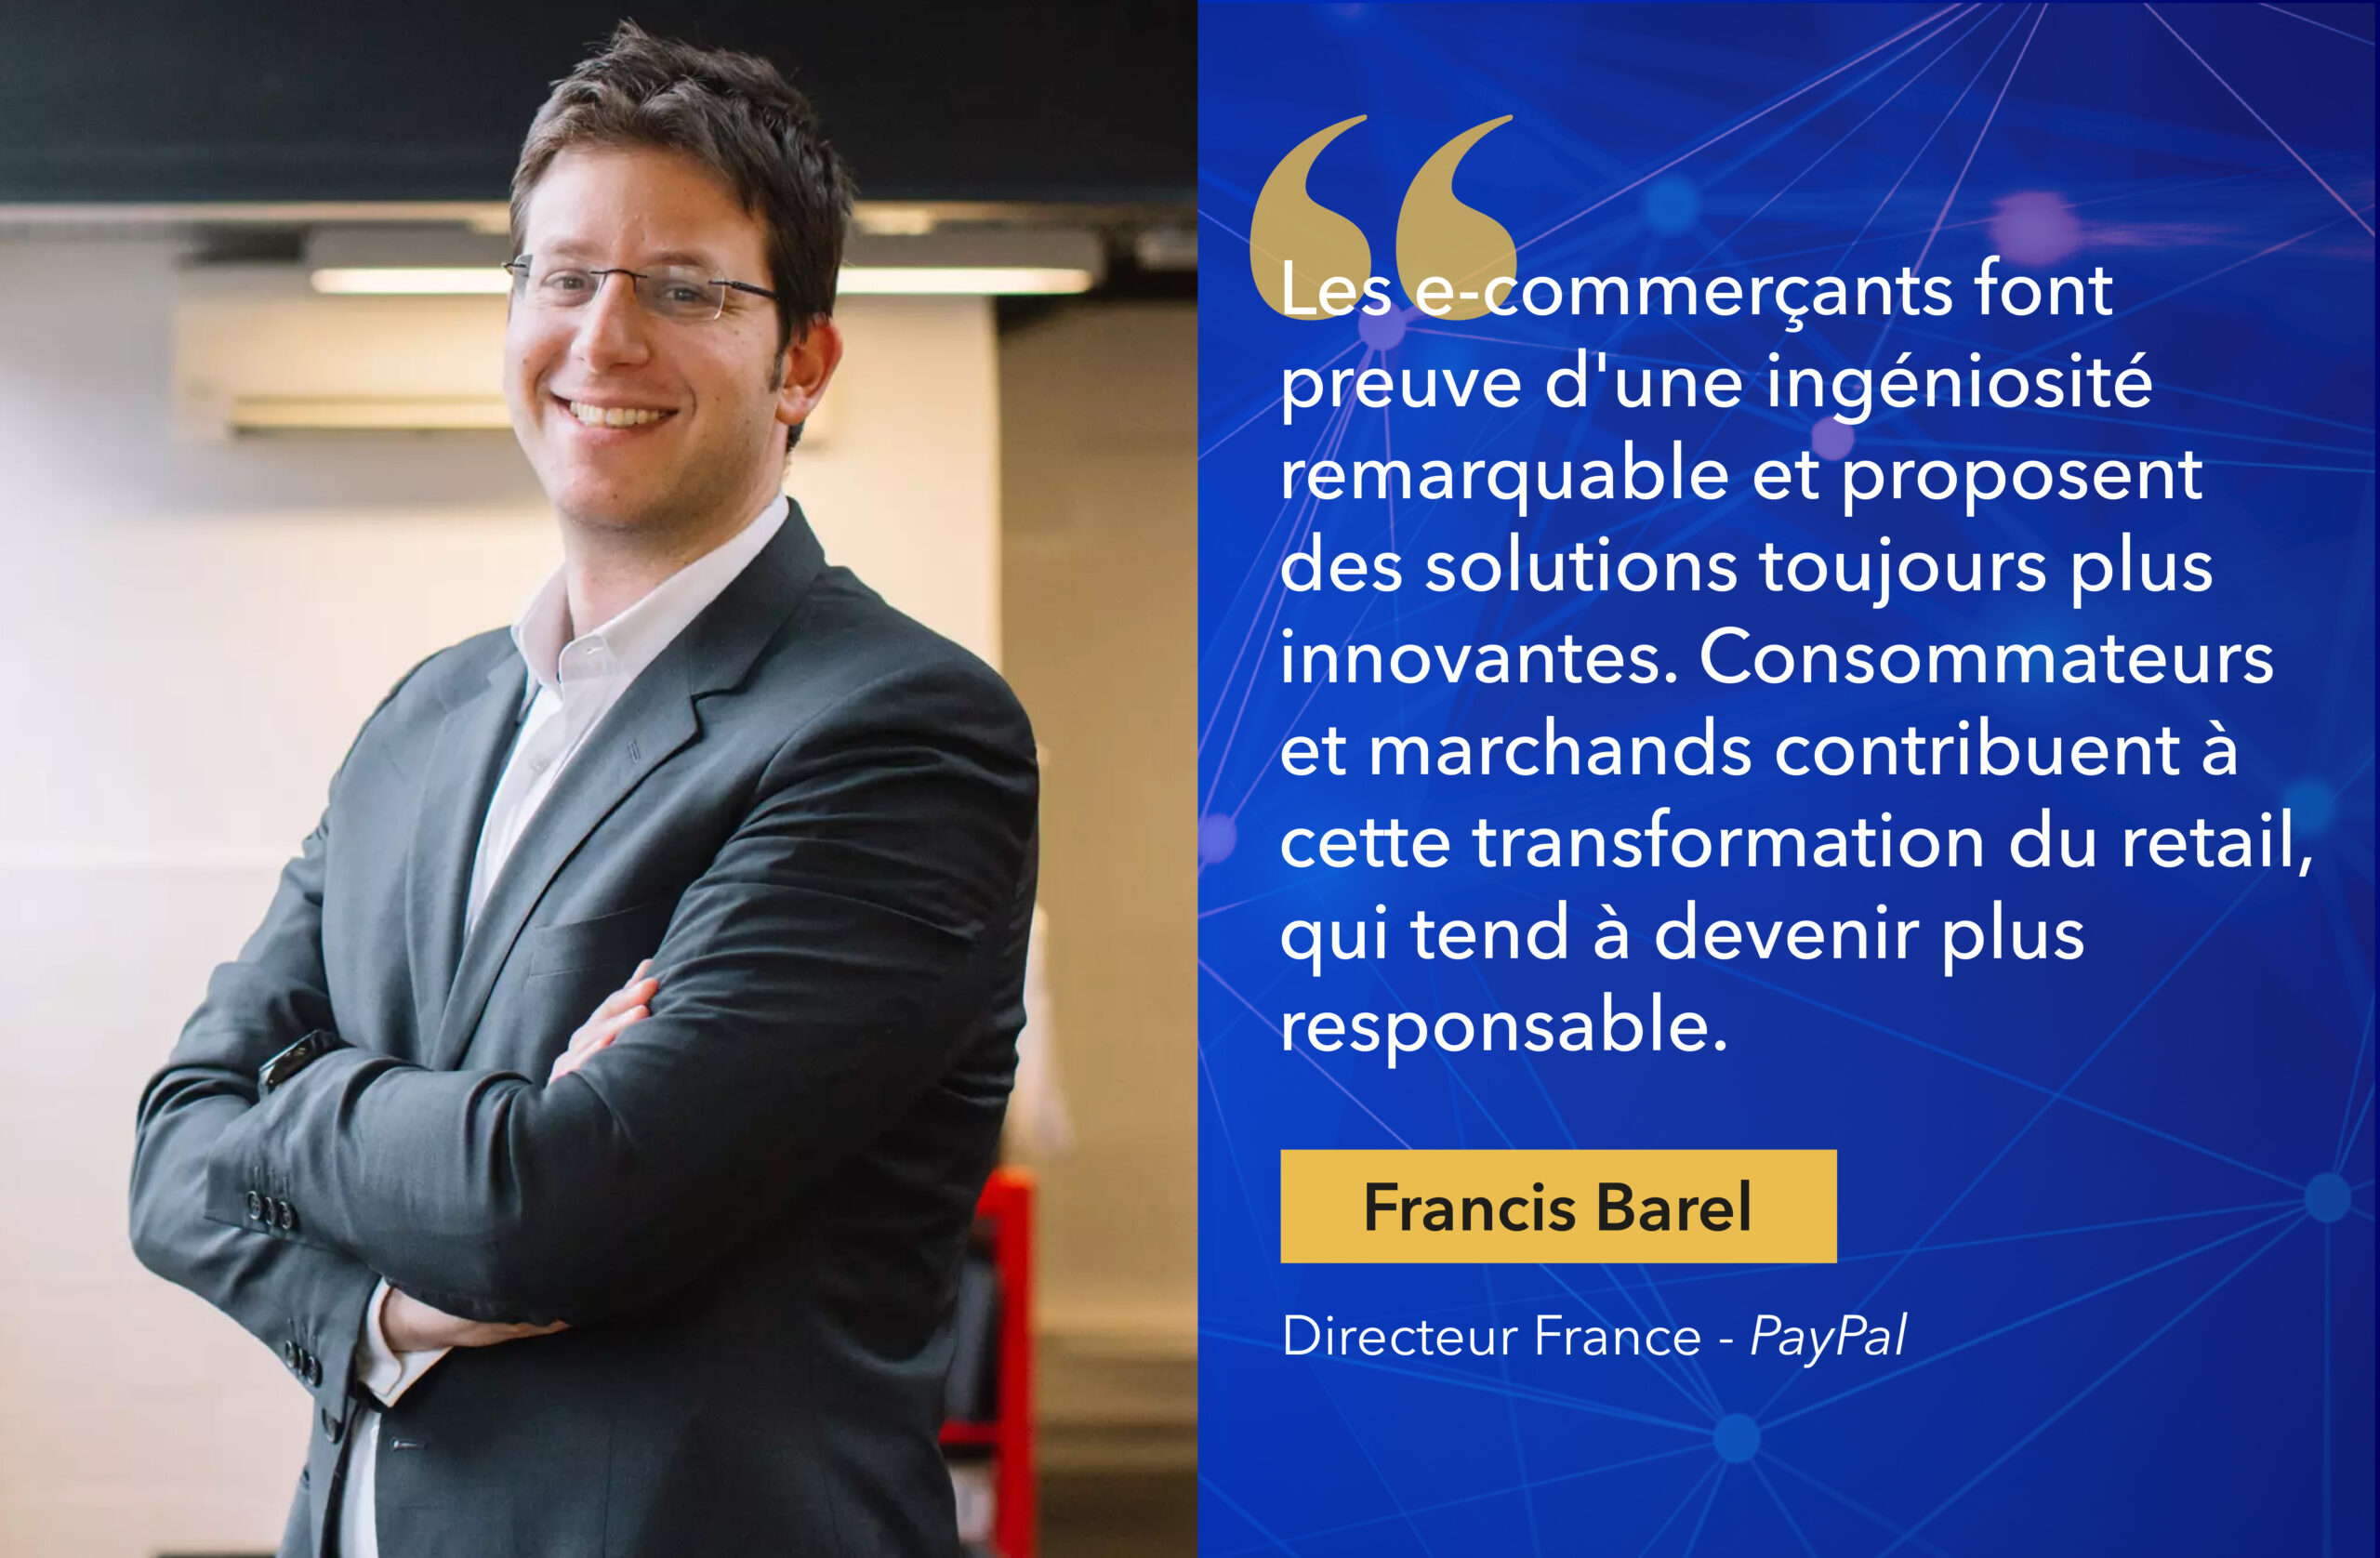 Francis Barel de PayPal